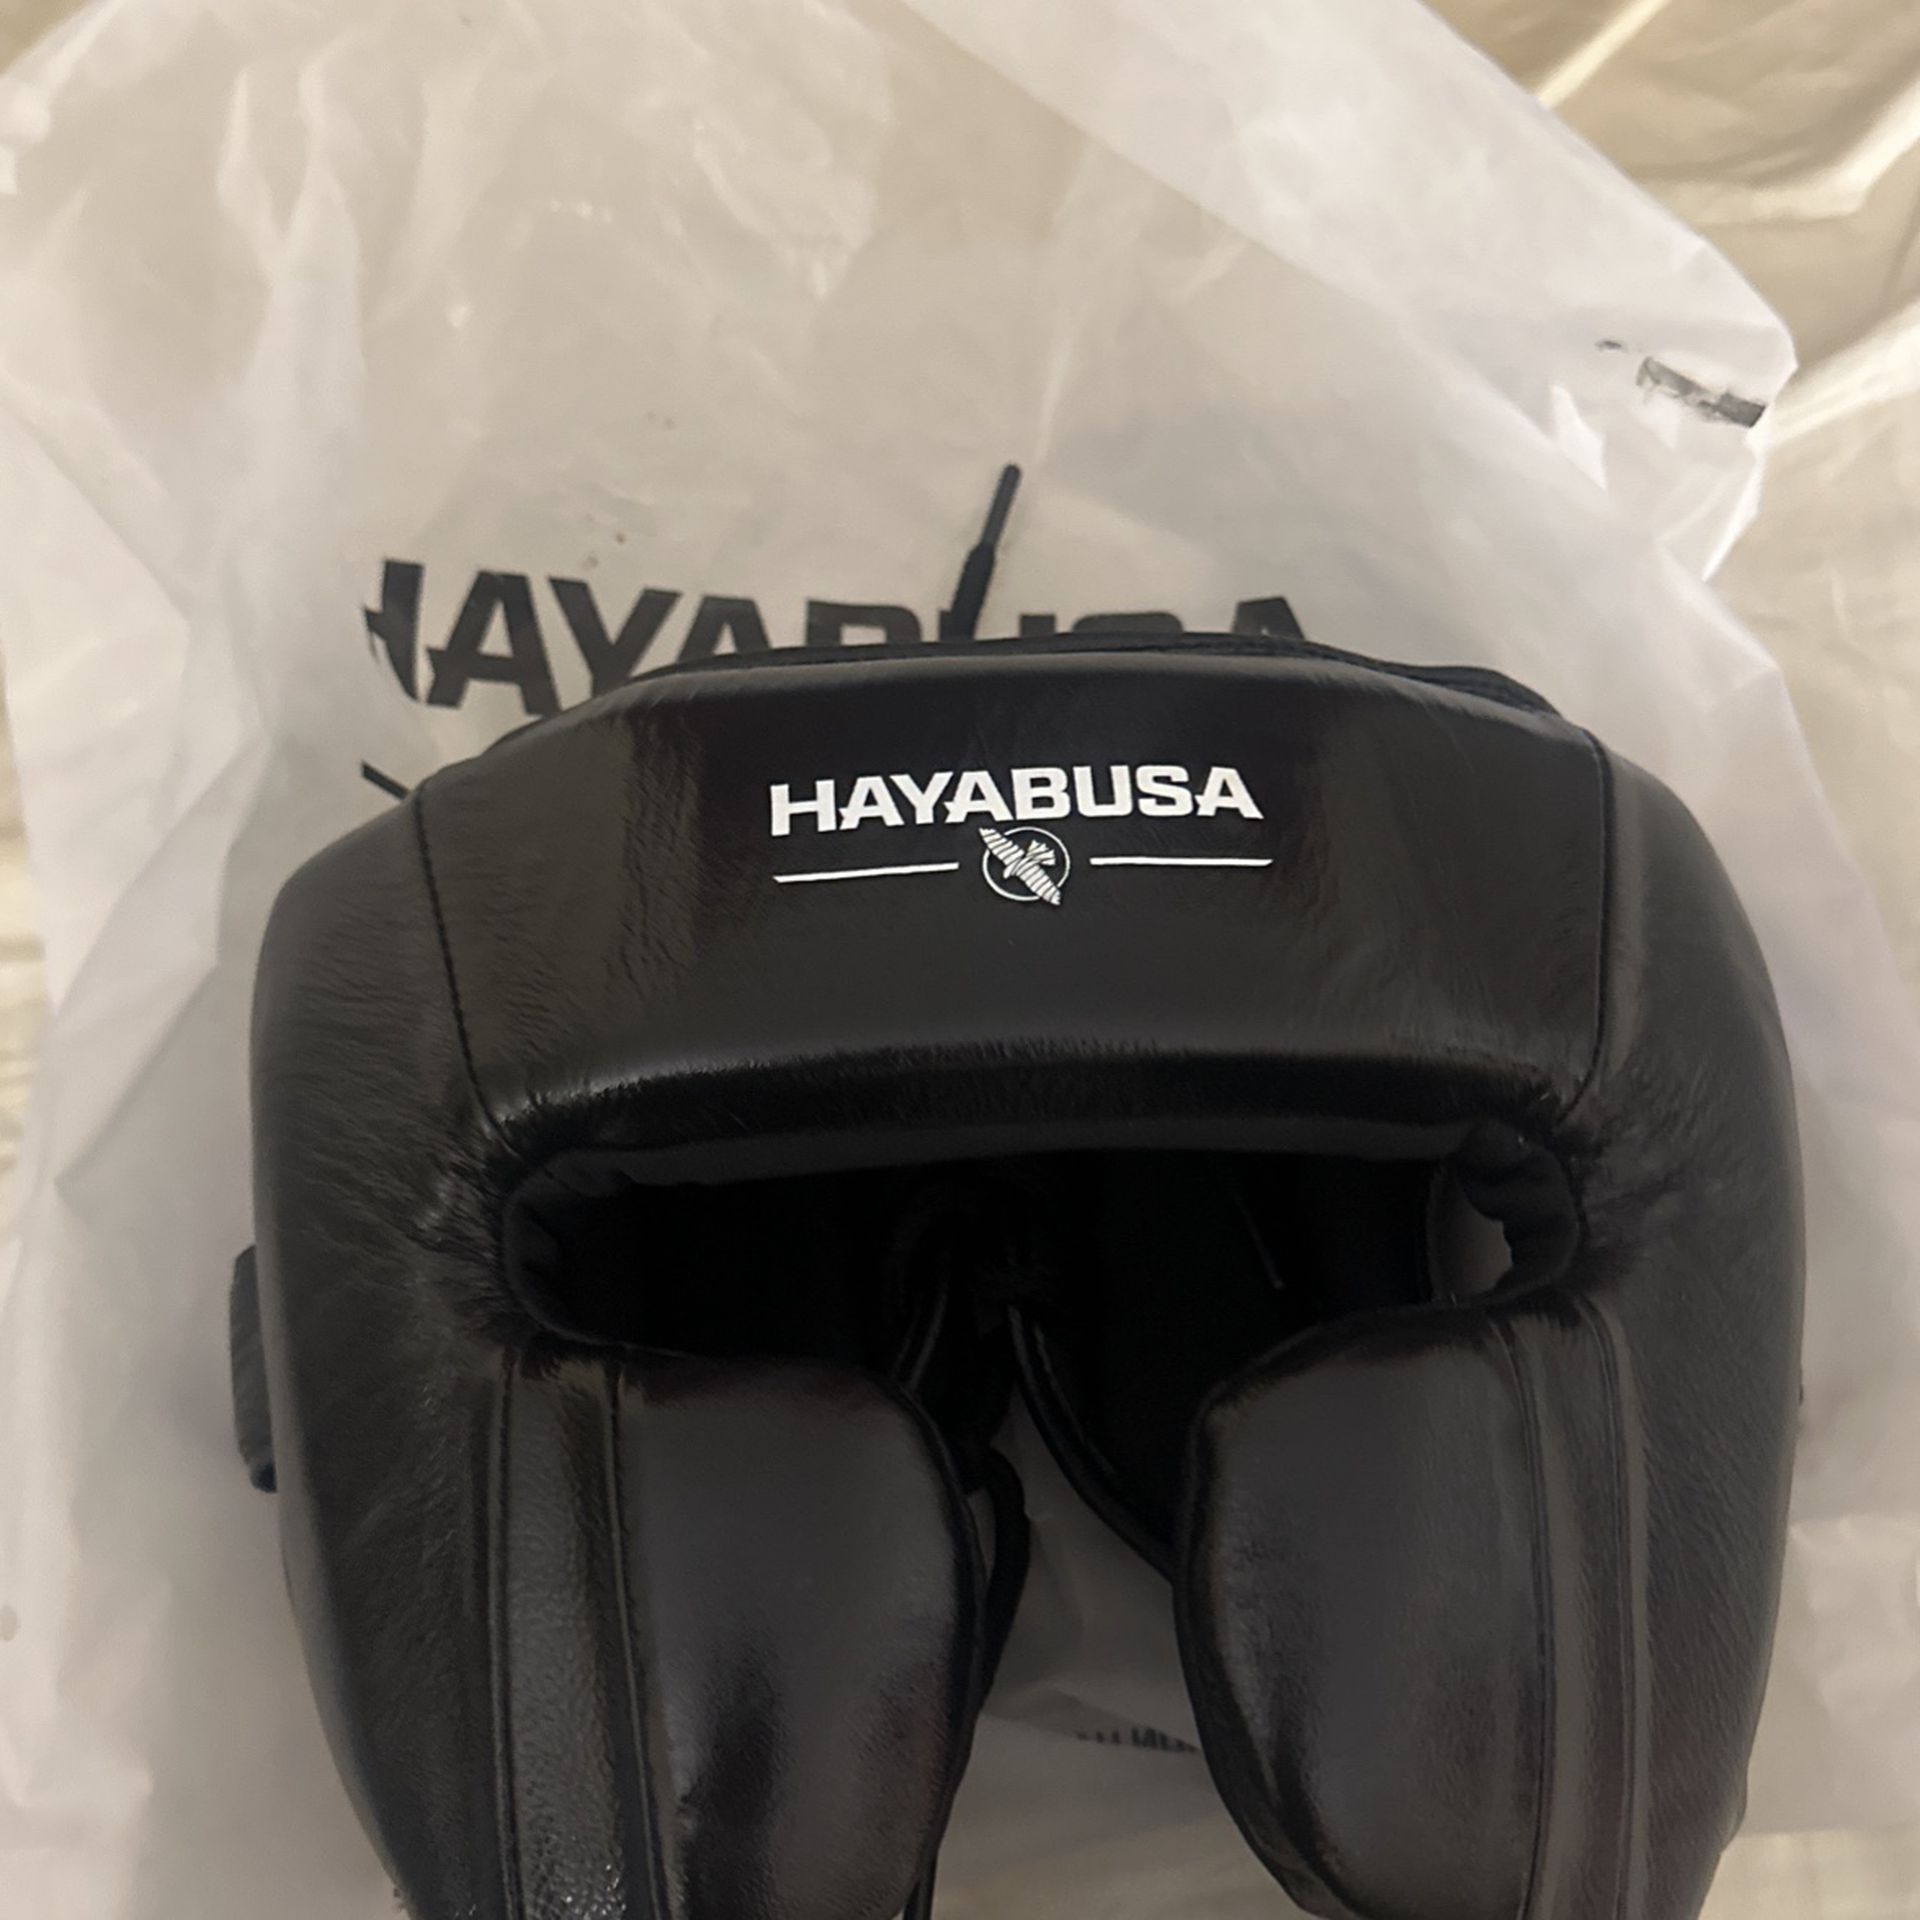 New Hayabusa Pro Boxing Headgear 